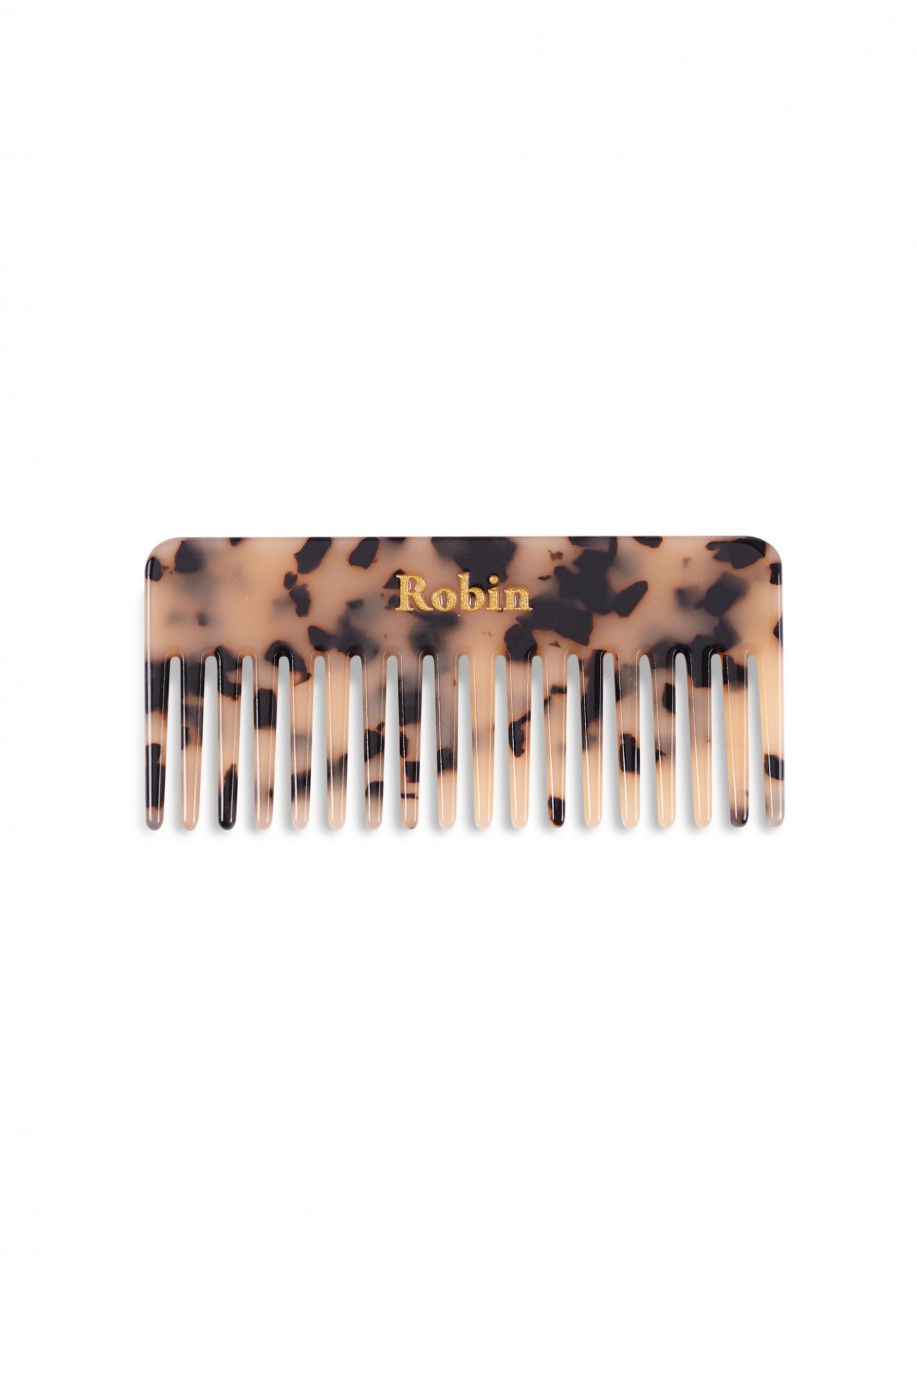 Robin Hair Comb | Robin collection